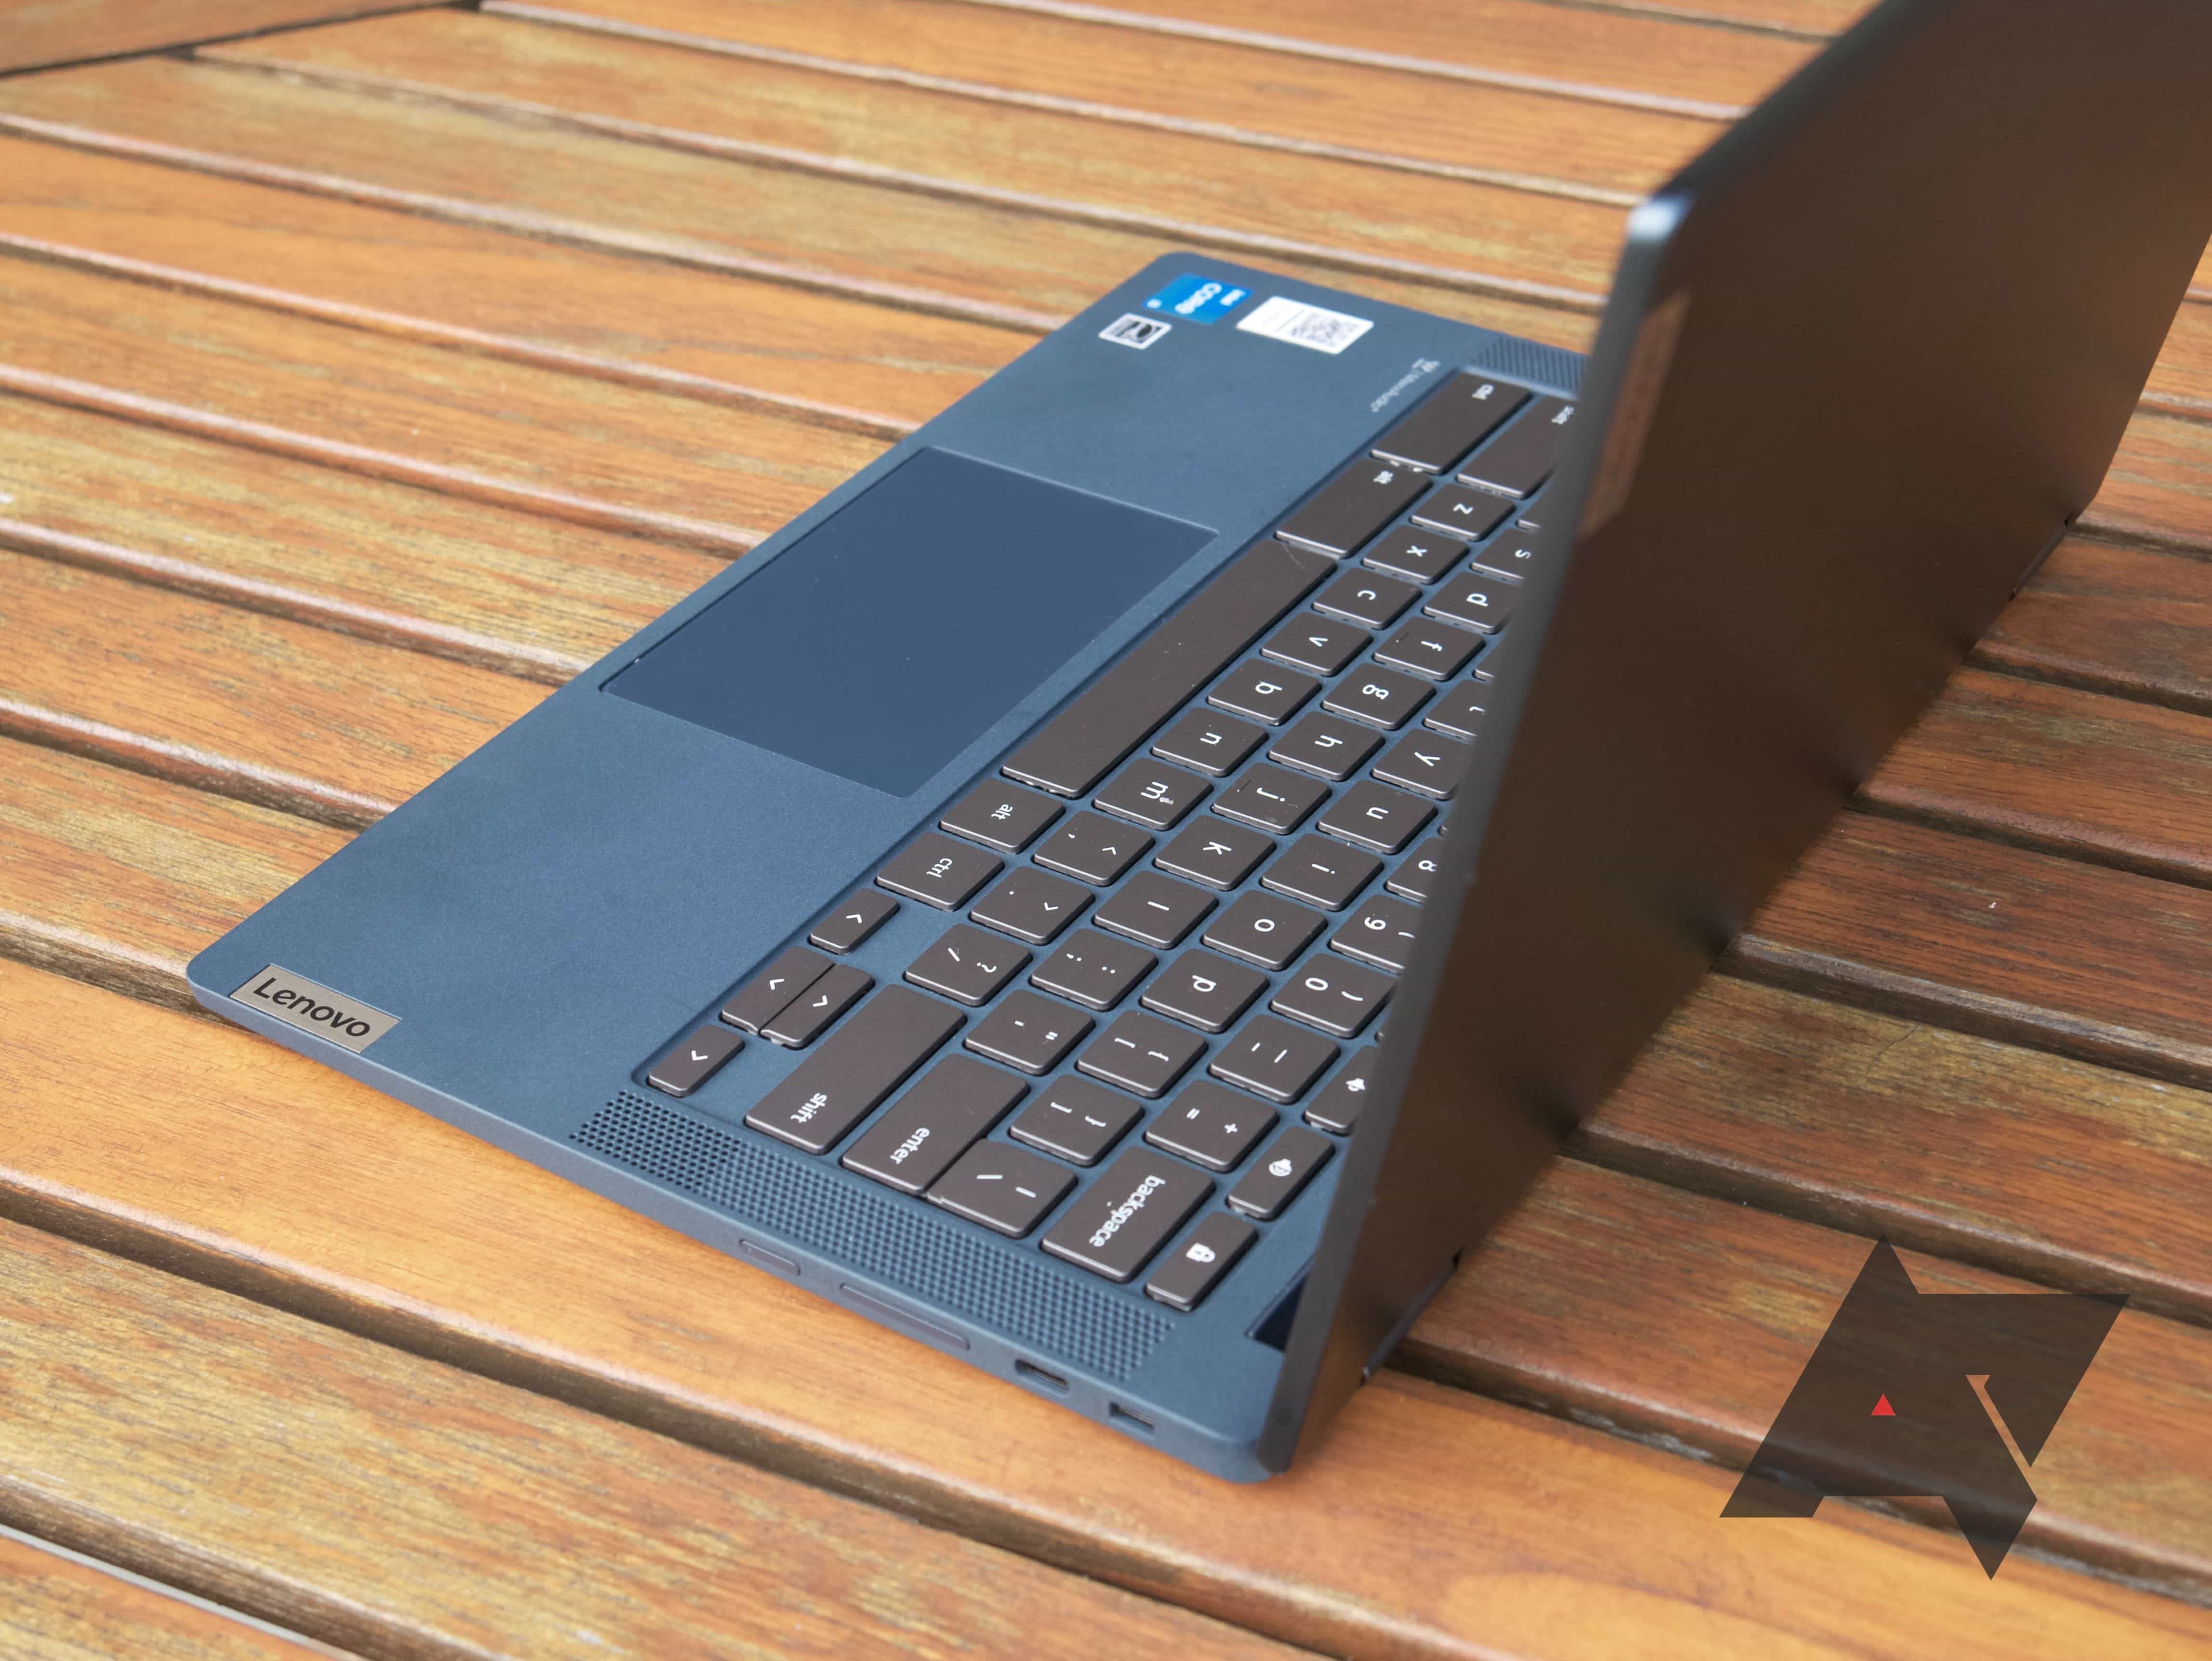 A Lenovo Flex 5 Chromebook sitting sideways on a wooden slatted table